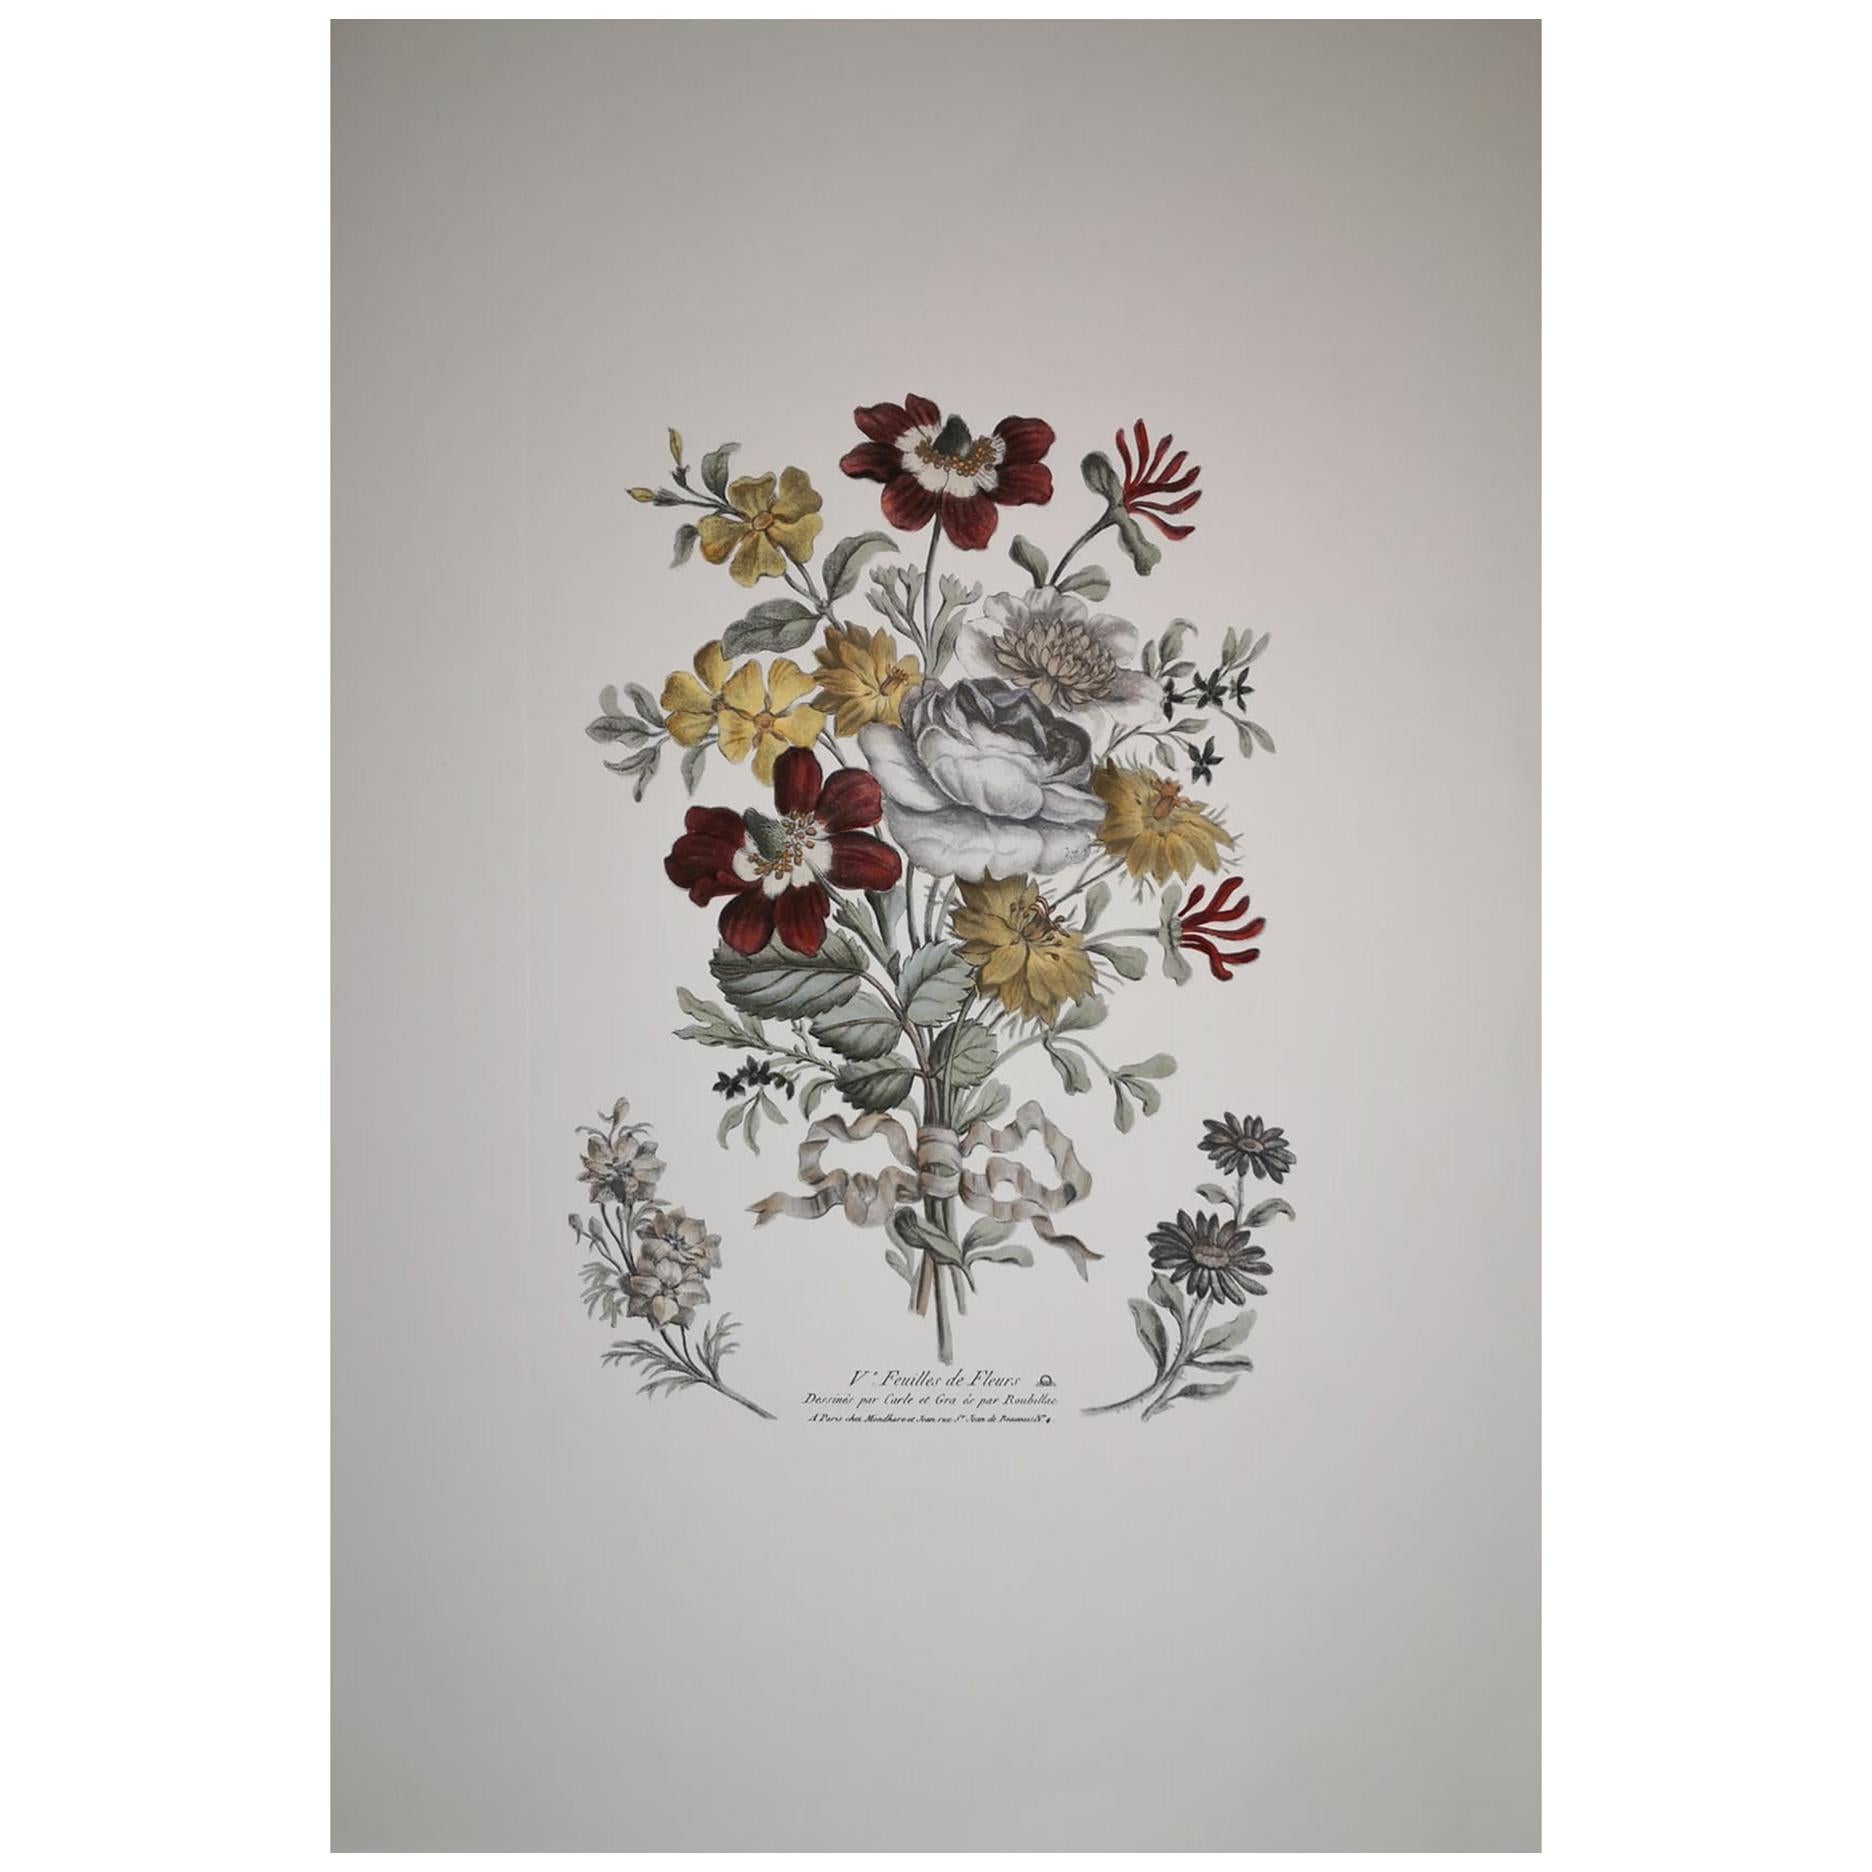 Italian Contemporary Hand Painted Botanical Print "V° Feuilles de Fleurs" For Sale